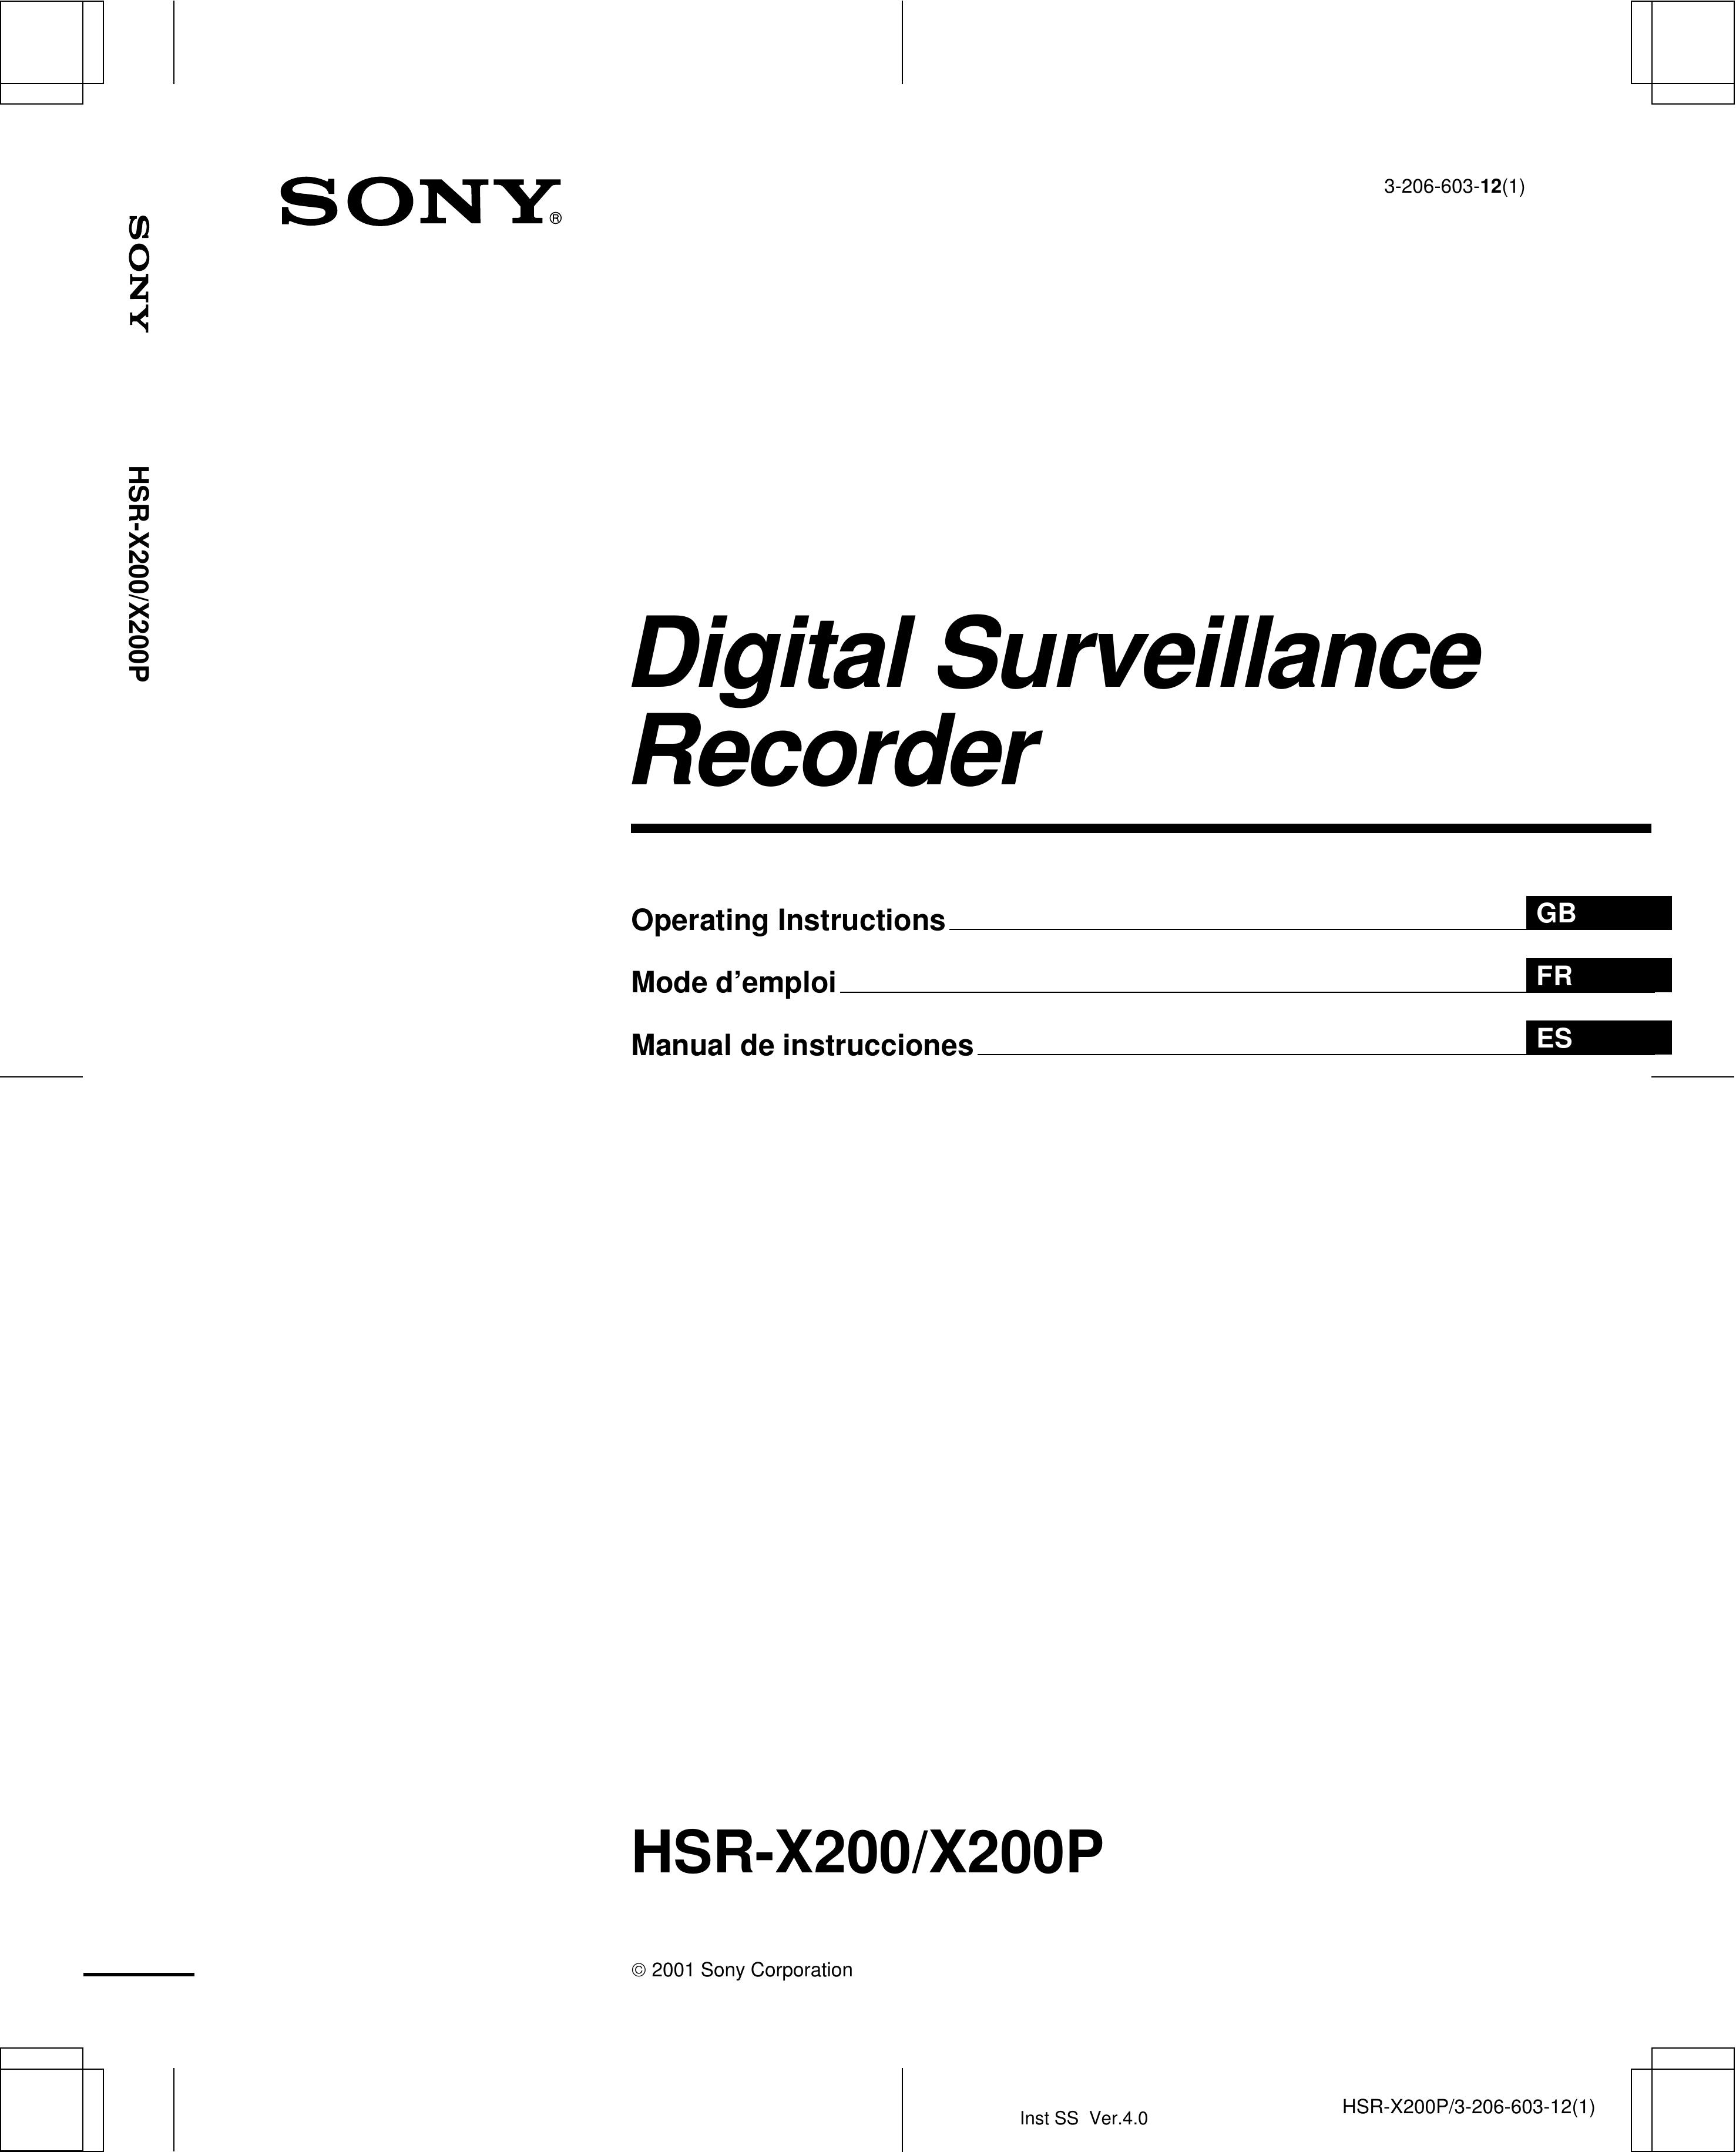 Sony HSR-X200P Security Camera User Manual